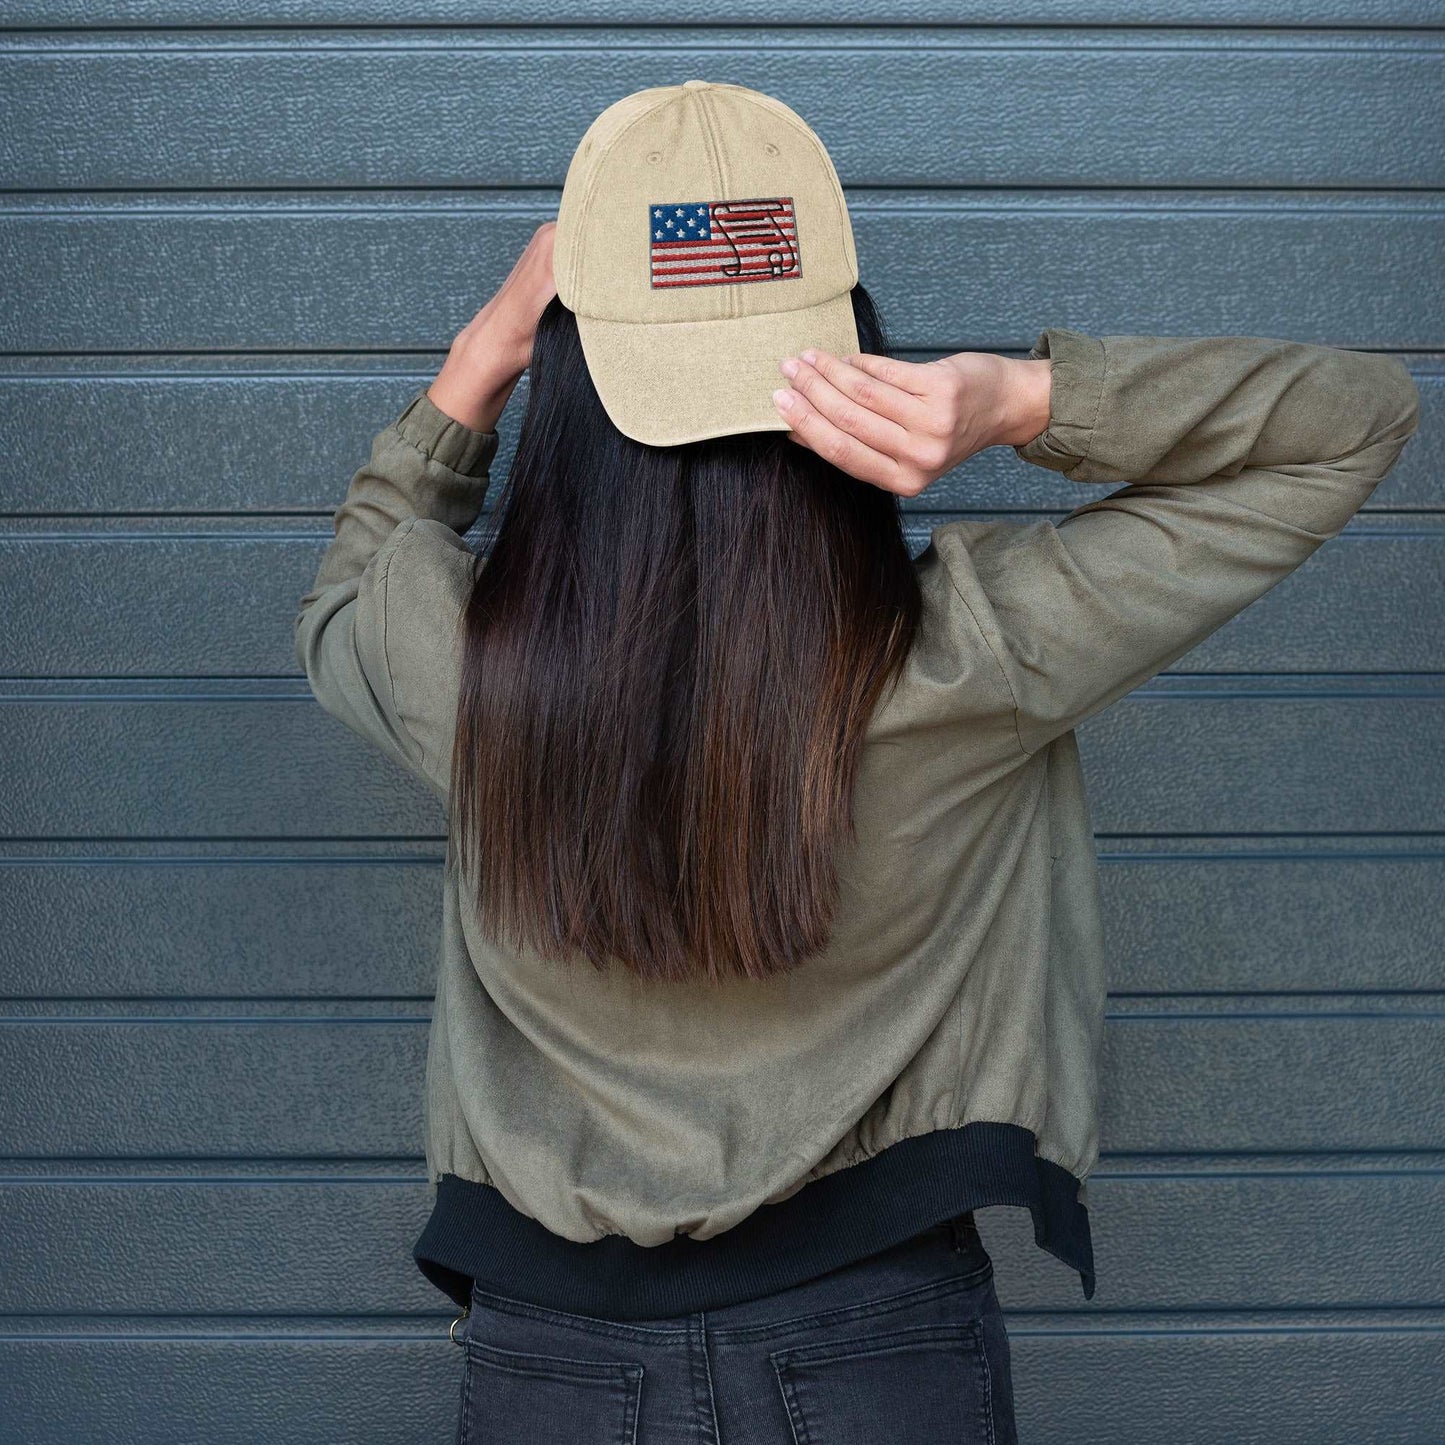 Embrace Freedom with Our U.S. Constitution Flag Vintage Hat - Lizard Vigilante